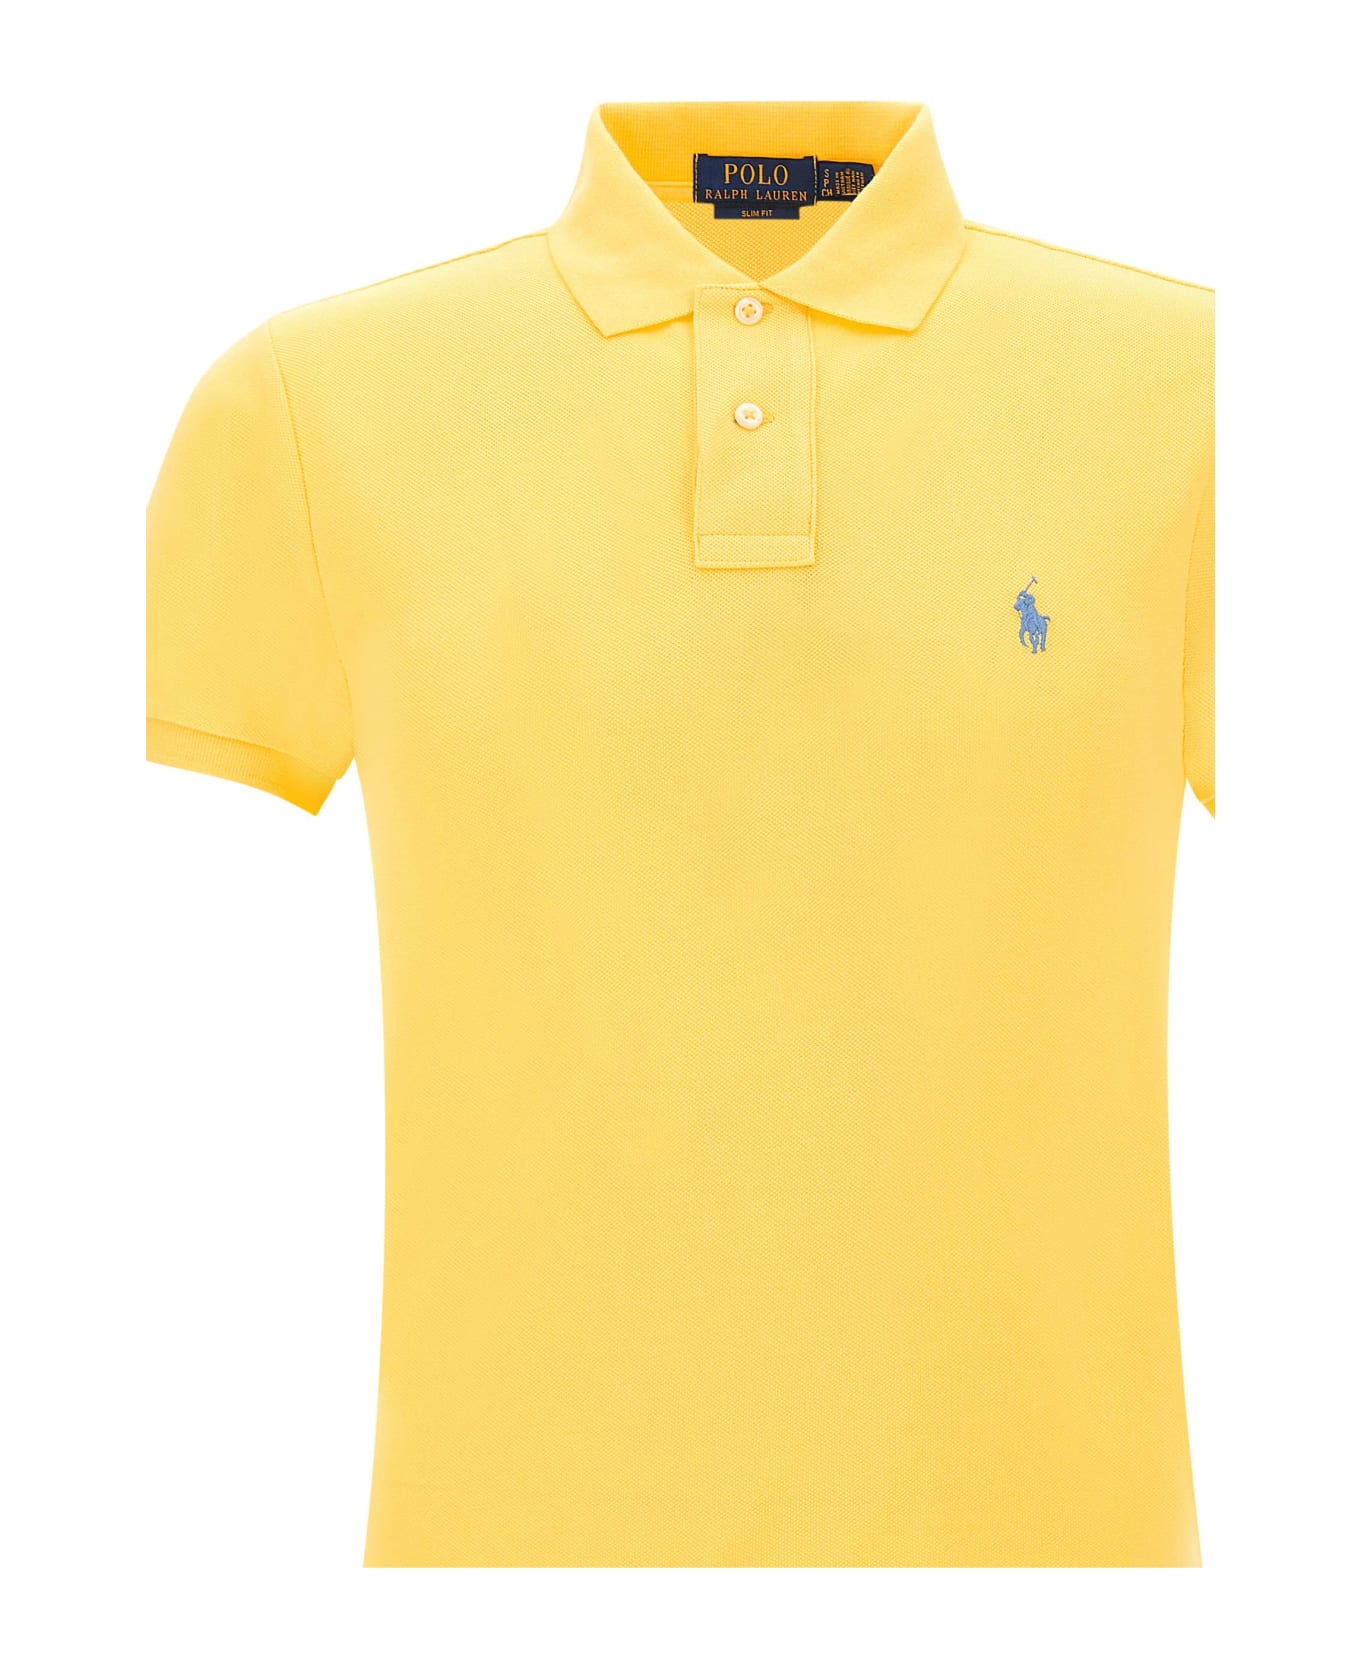 Polo Ralph Lauren "classics" Piquet Cotton Polo Shirt - YELLOW ポロシャツ